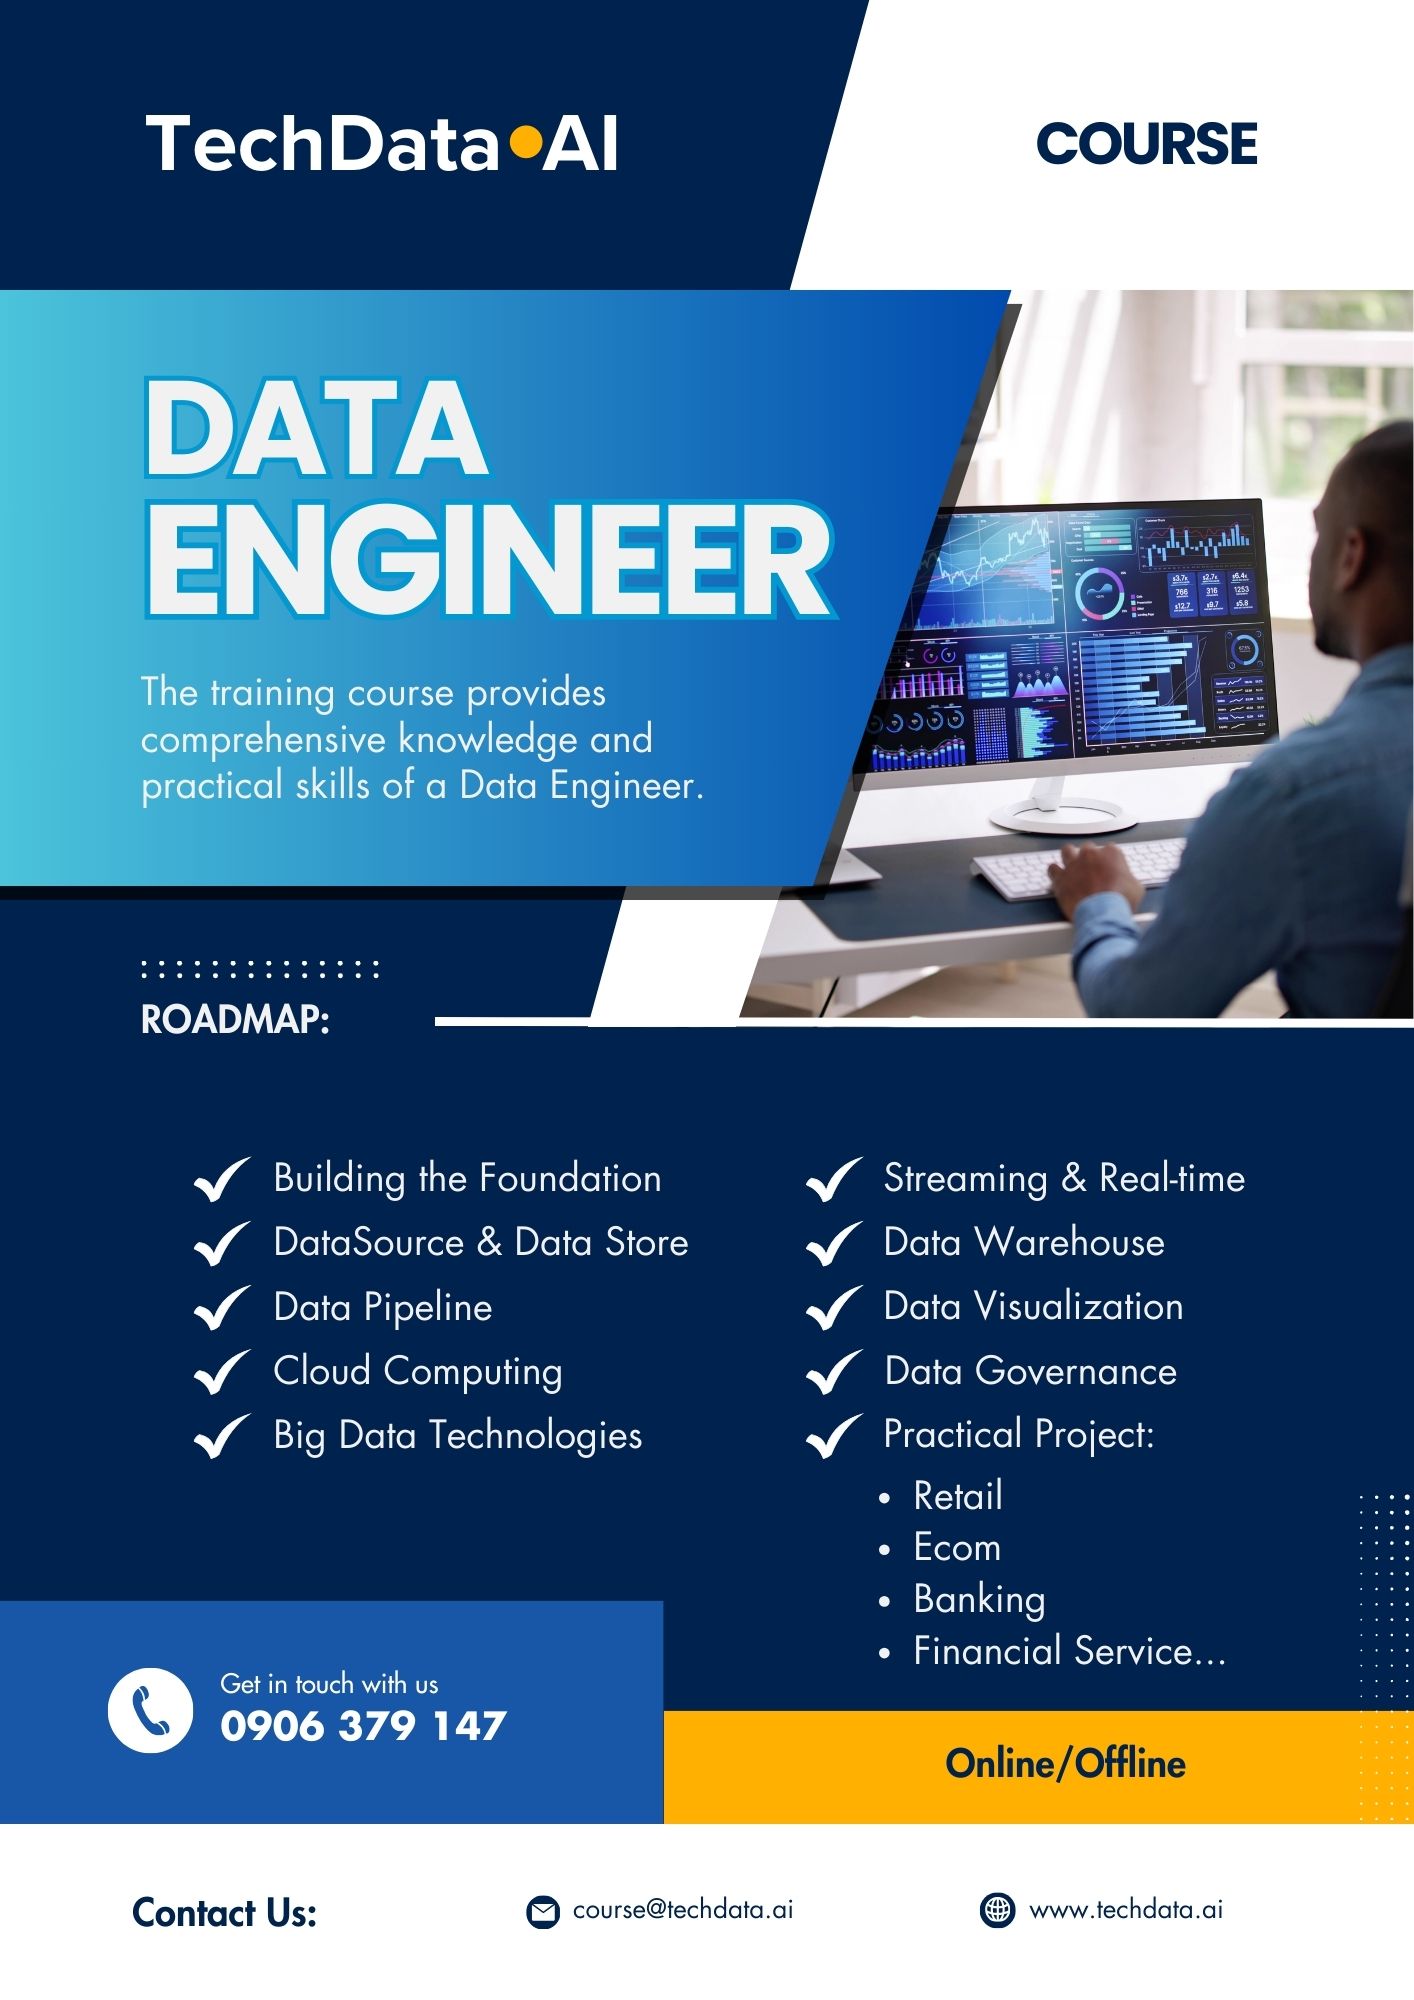 TechData.AI - Data Engineer Course